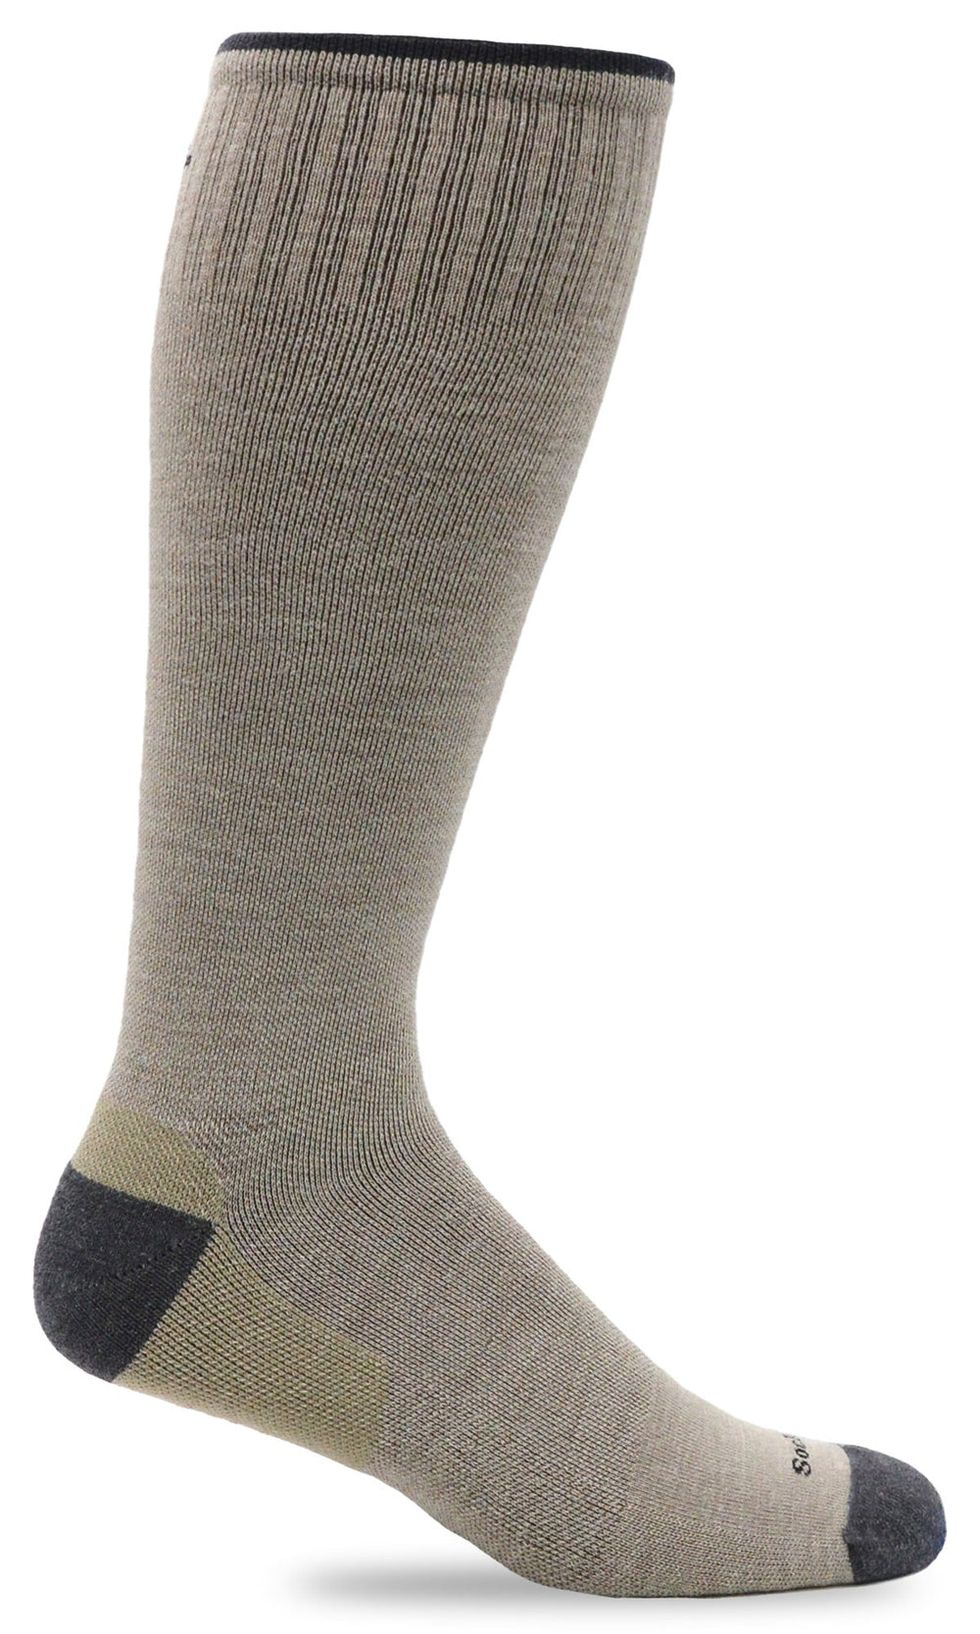 Men's Elevation Firm Graduated Compression Socks